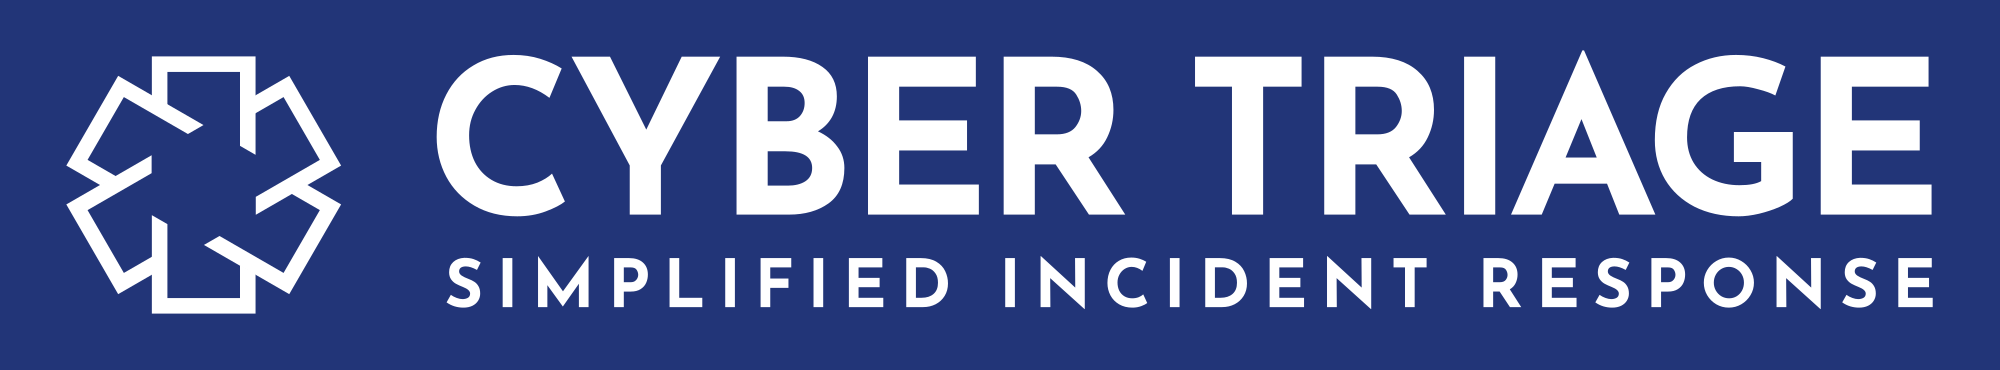 Cyber Triage logo (SVG)